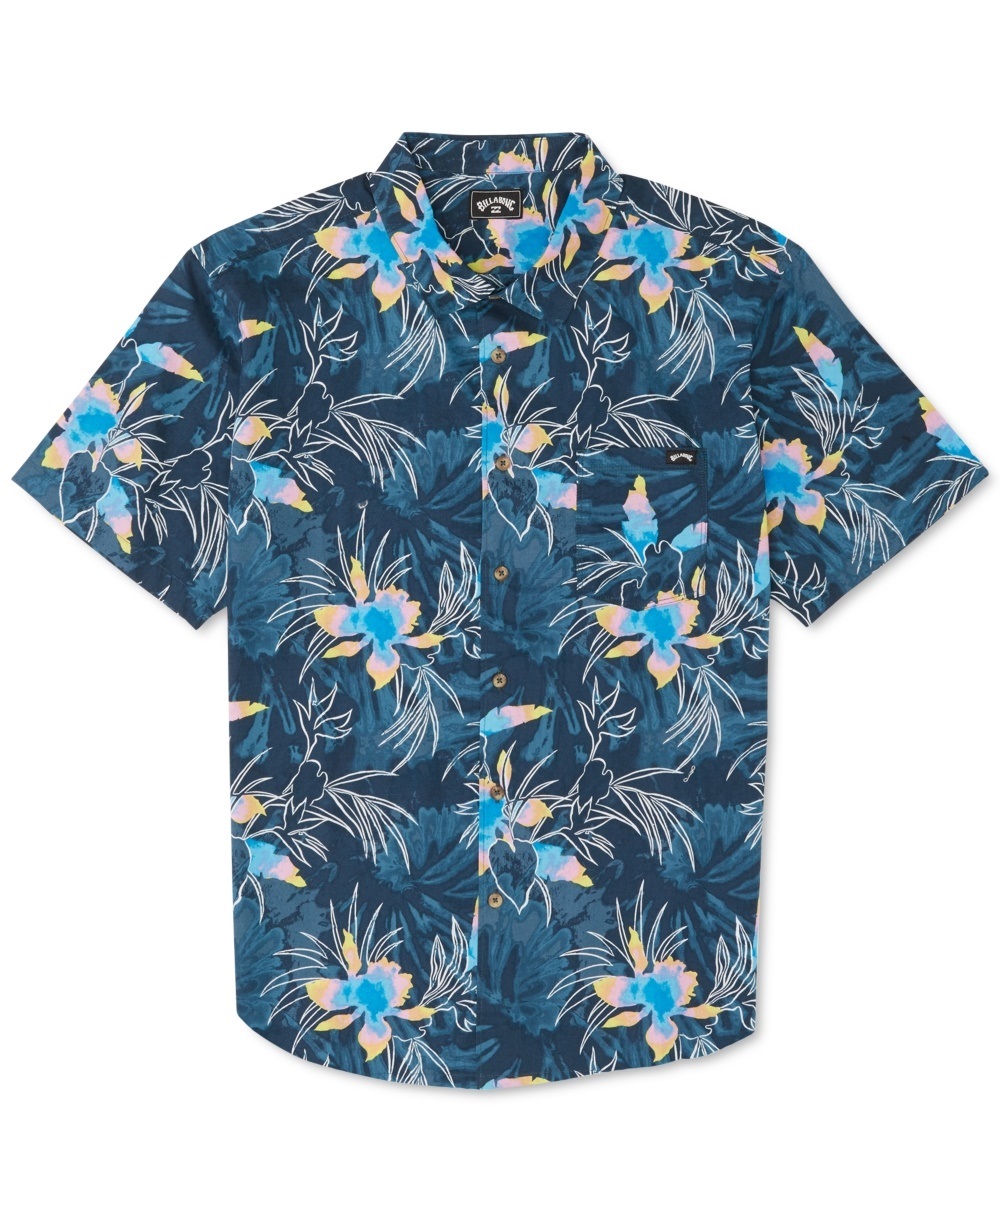 Billabong Men's Sundays Tropical-Print Shirt Blue Size XX-Large